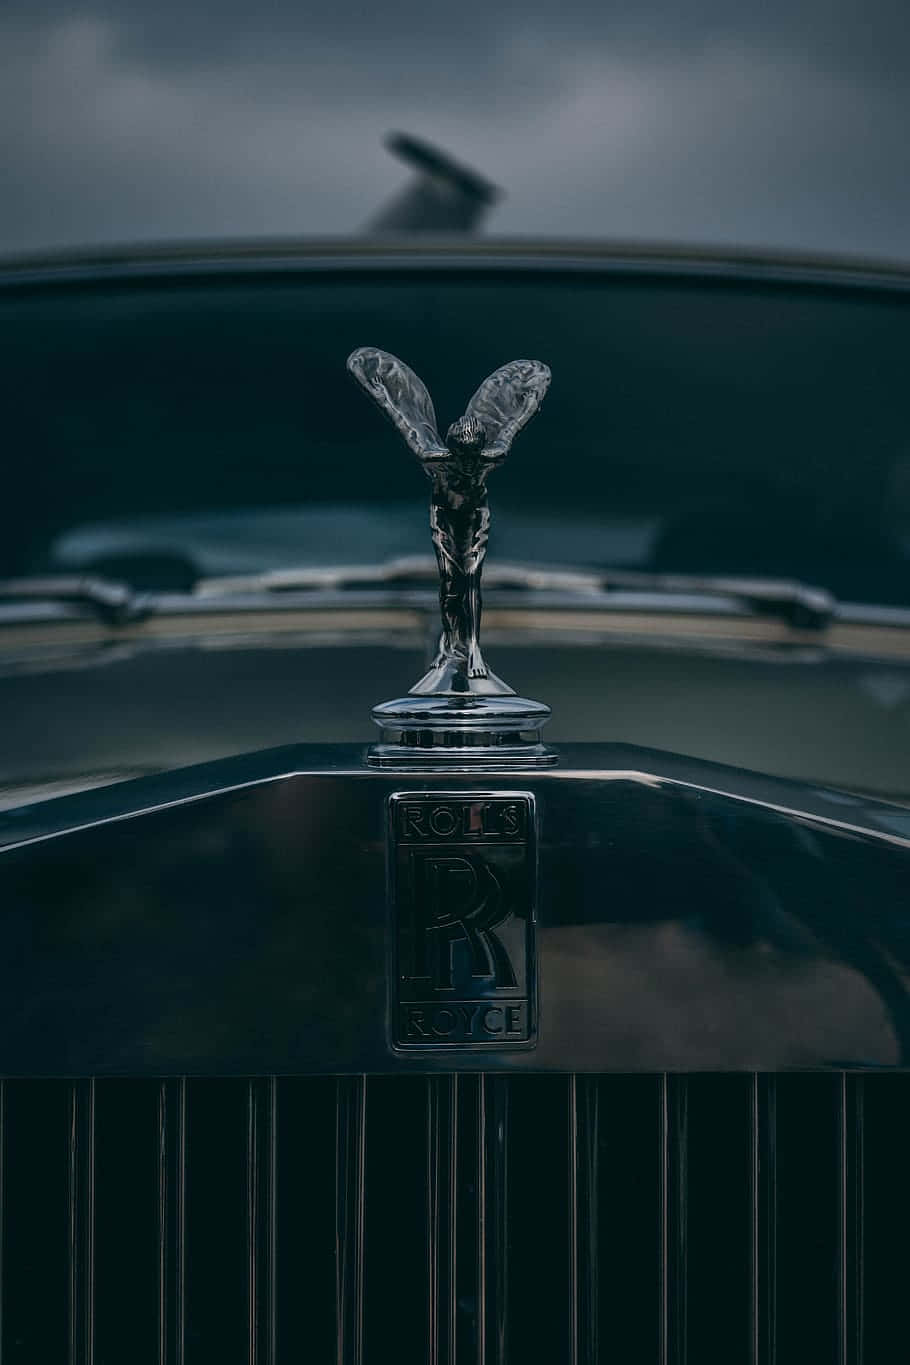 Rolls Royce Car Detailing Wallpaper